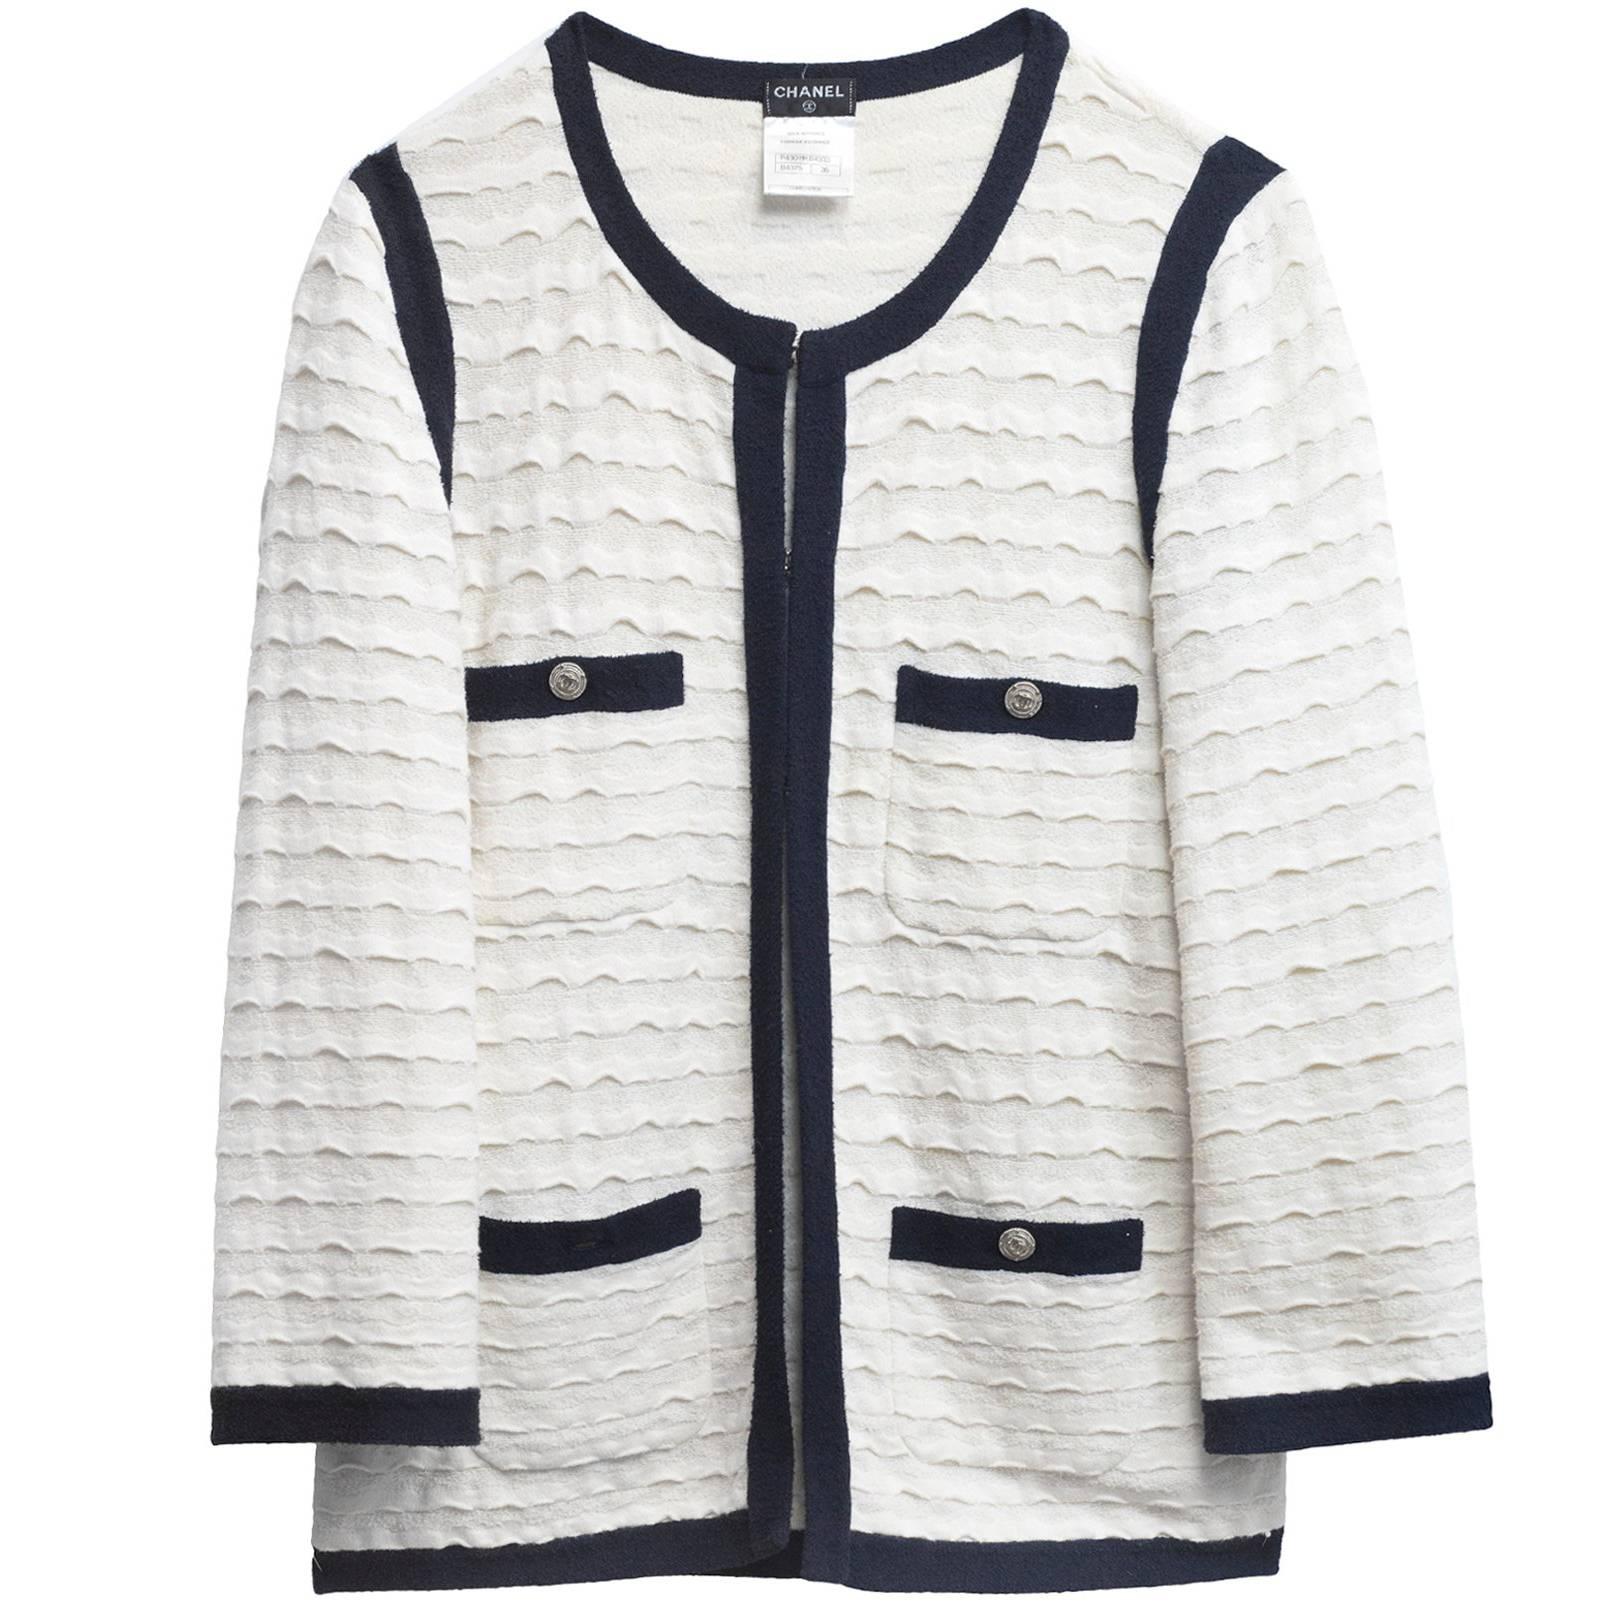 Chanel Cream & Navy Knit Cardigan Sweater sz FR36